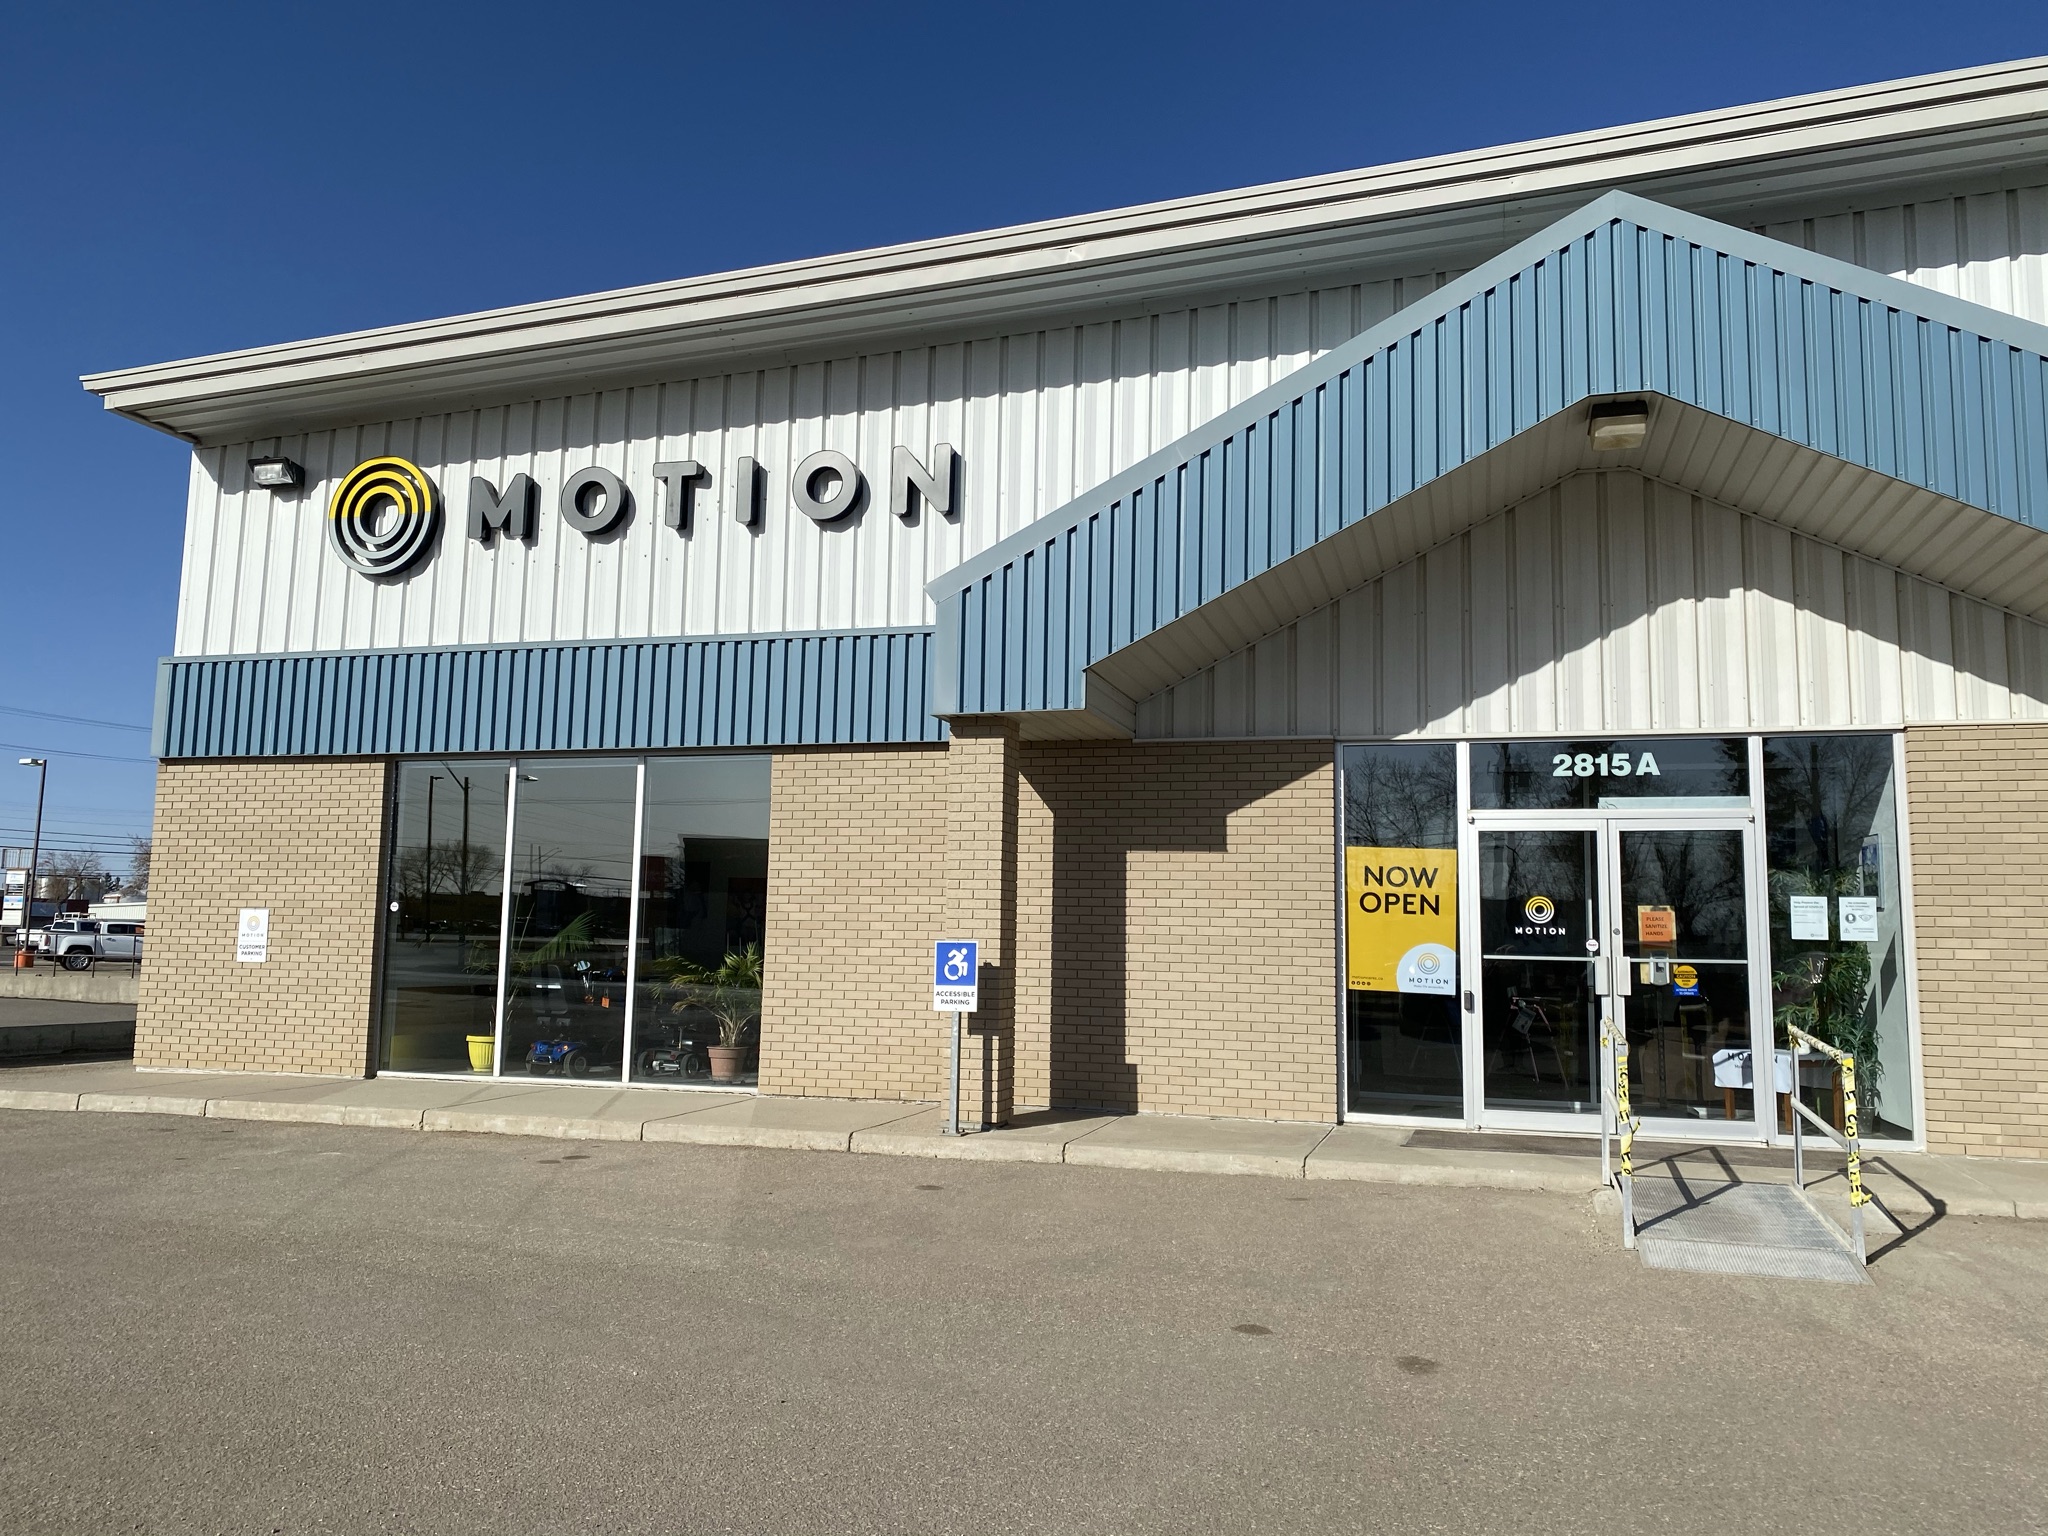 In motion (Saskatoon and Region)